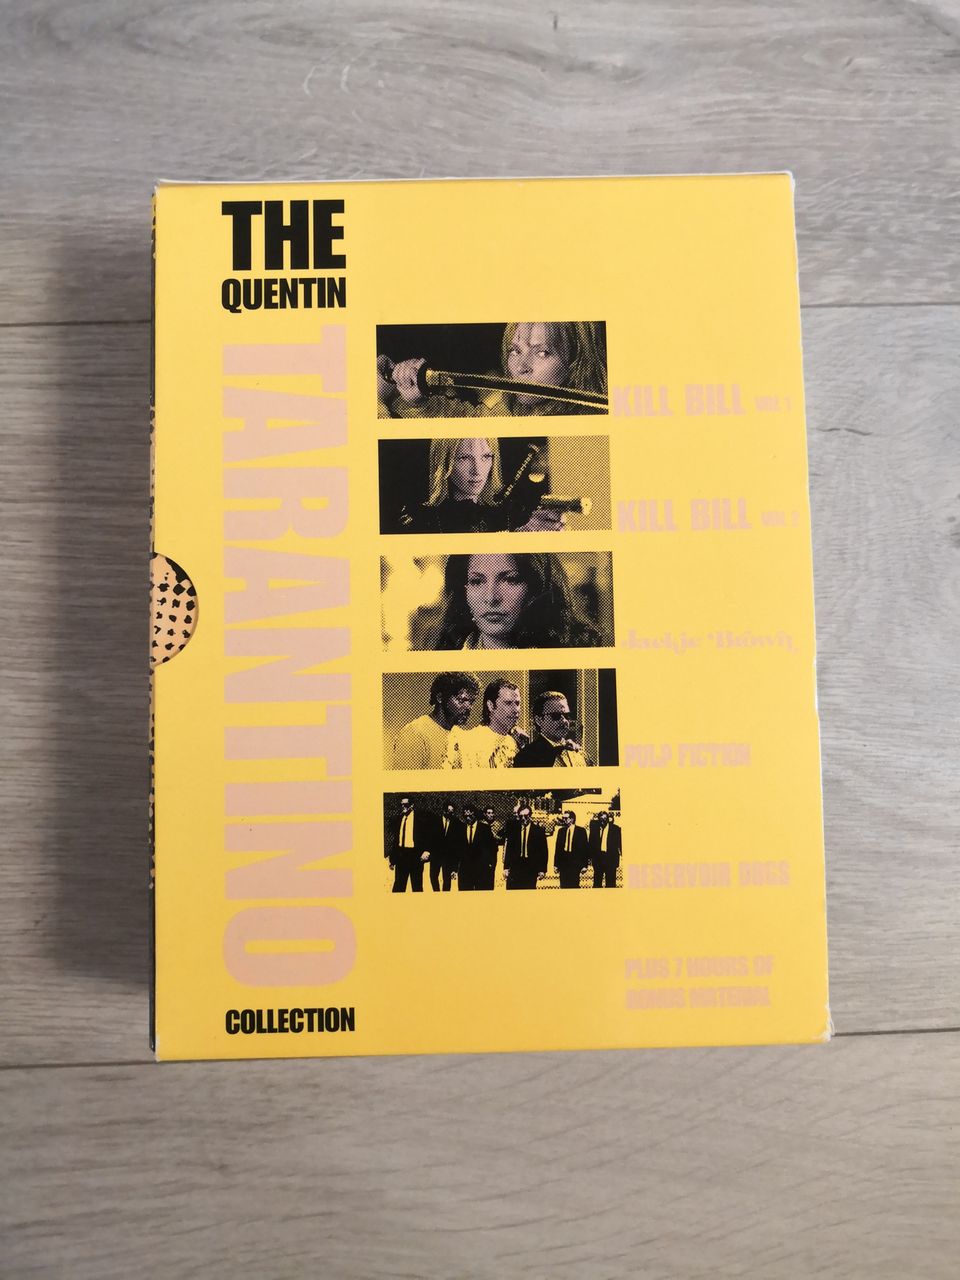 The Quintin Tarantino Collection DVD